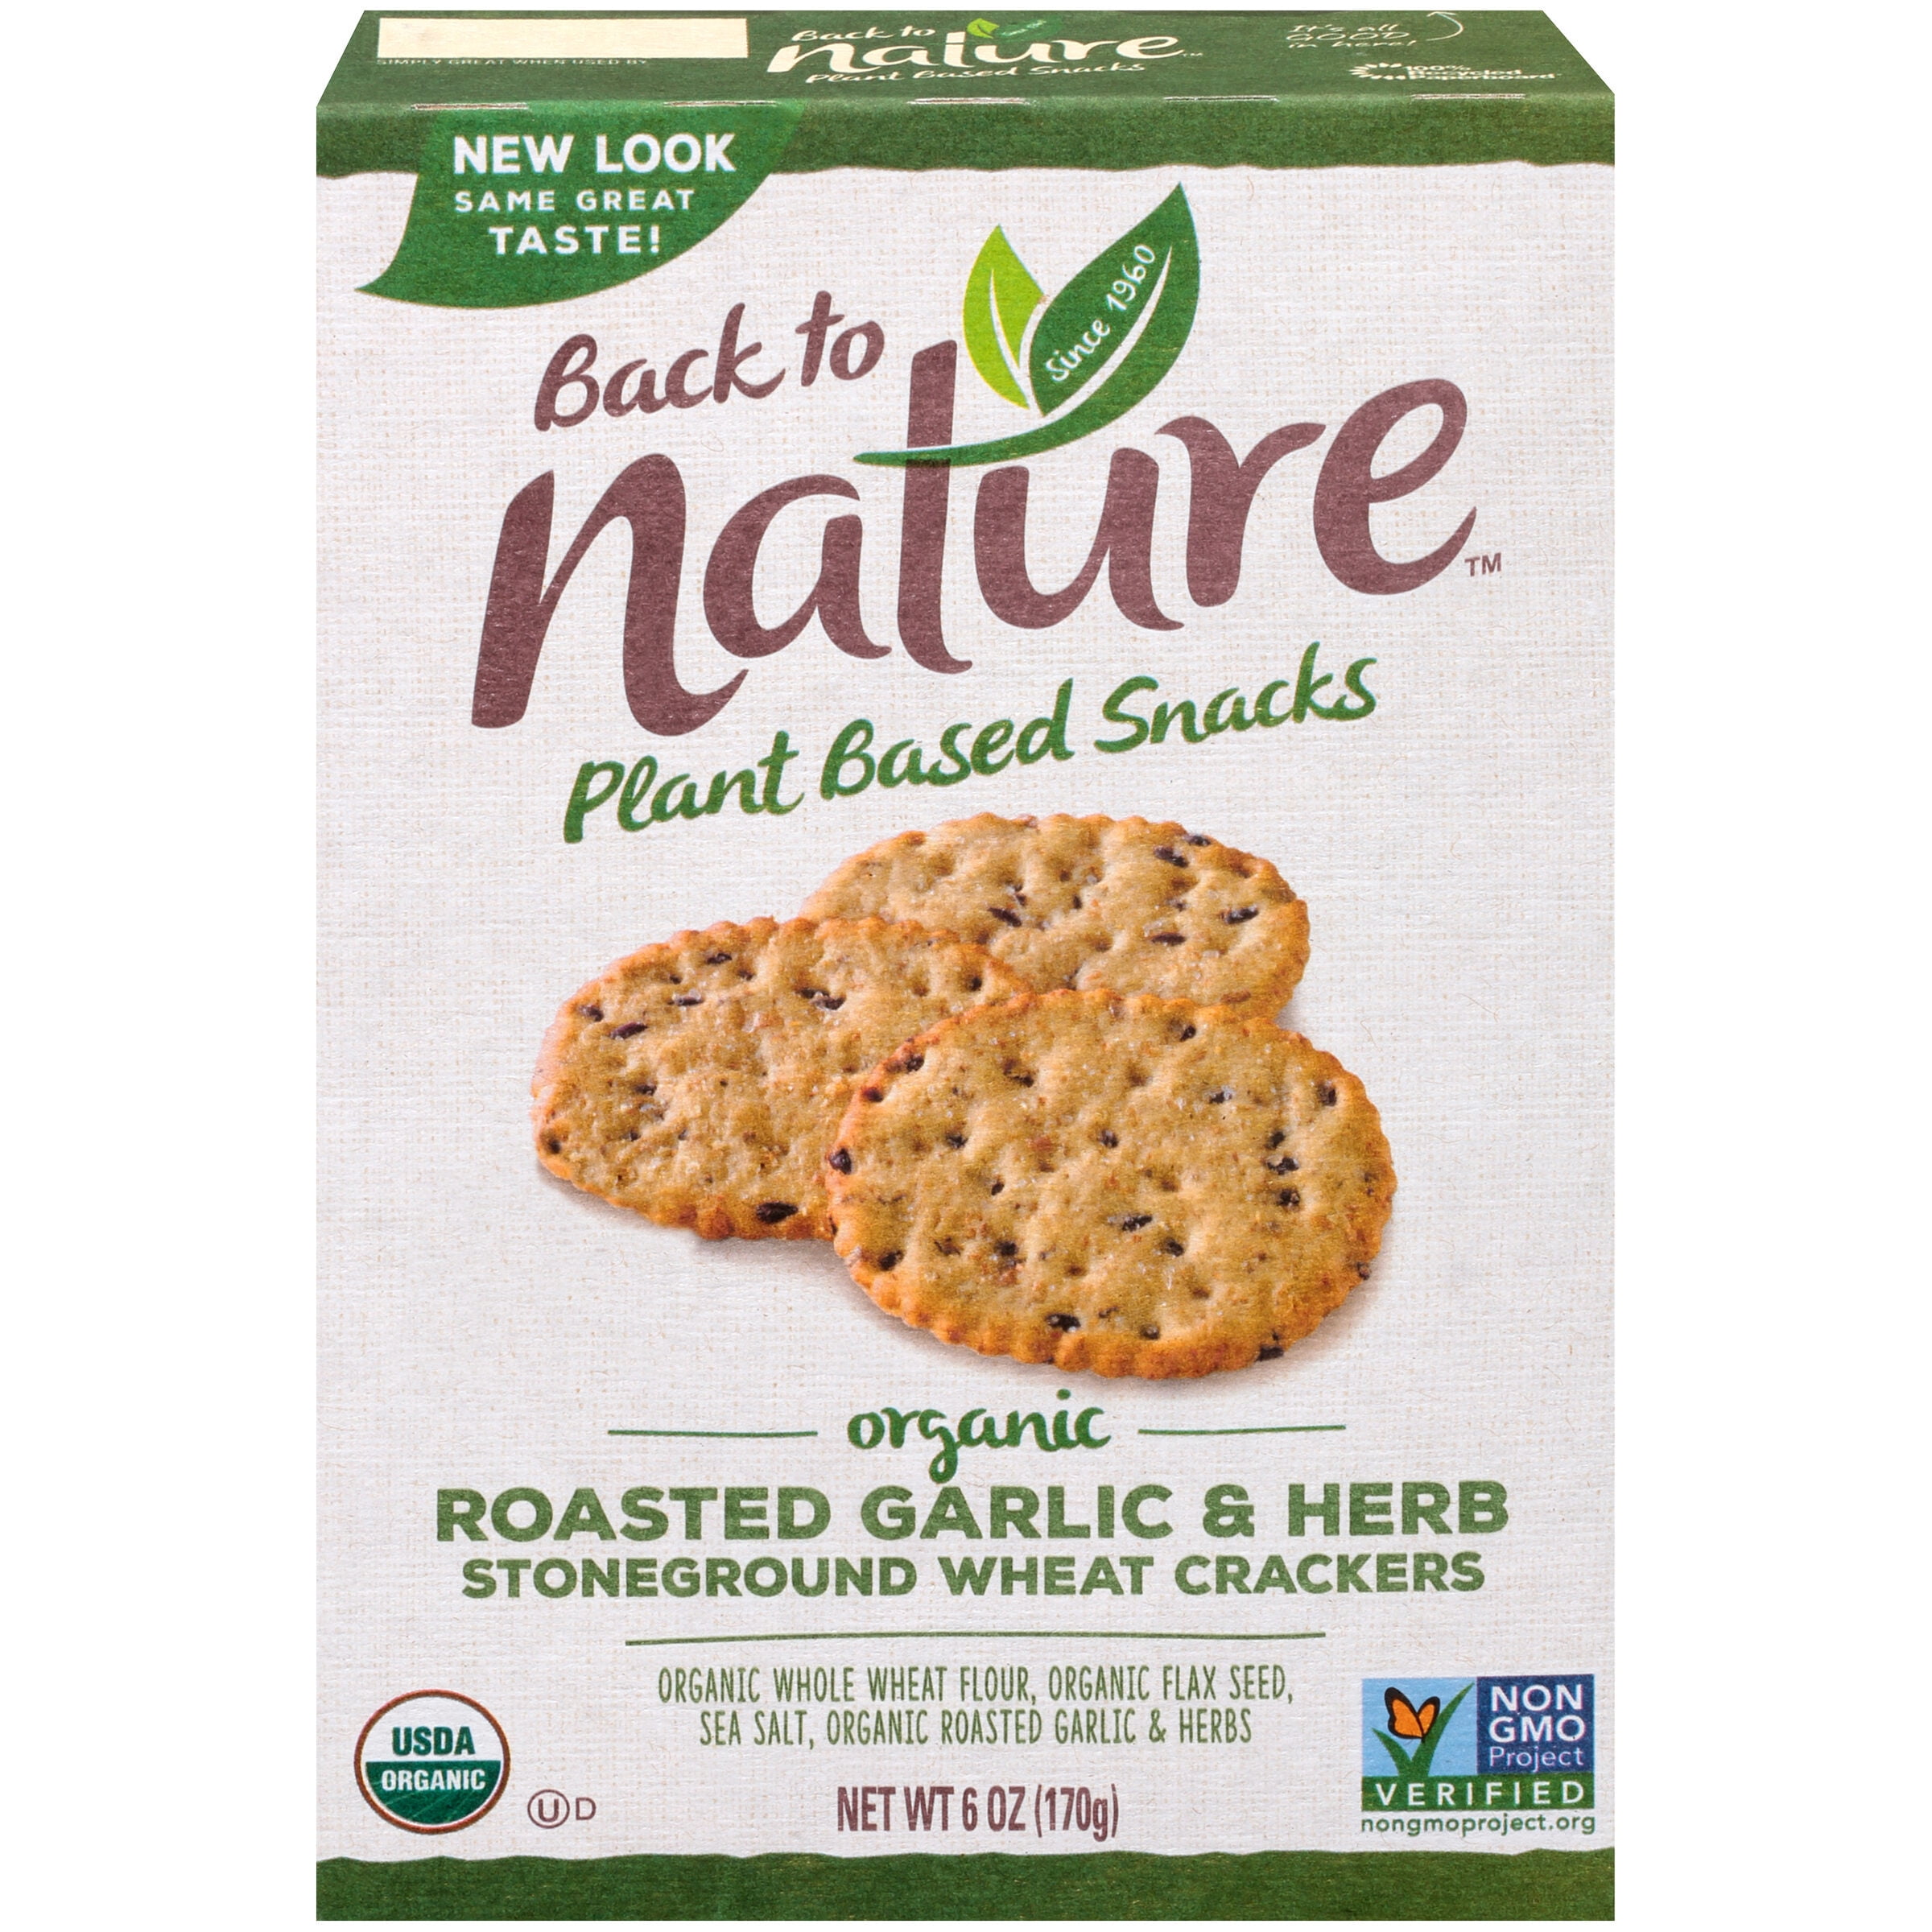 Photo 1 of Back to Nature Plant Based Snacks Organic Roasted Garlic Herb Stoneground Wheat Crackers 6 oz. Box